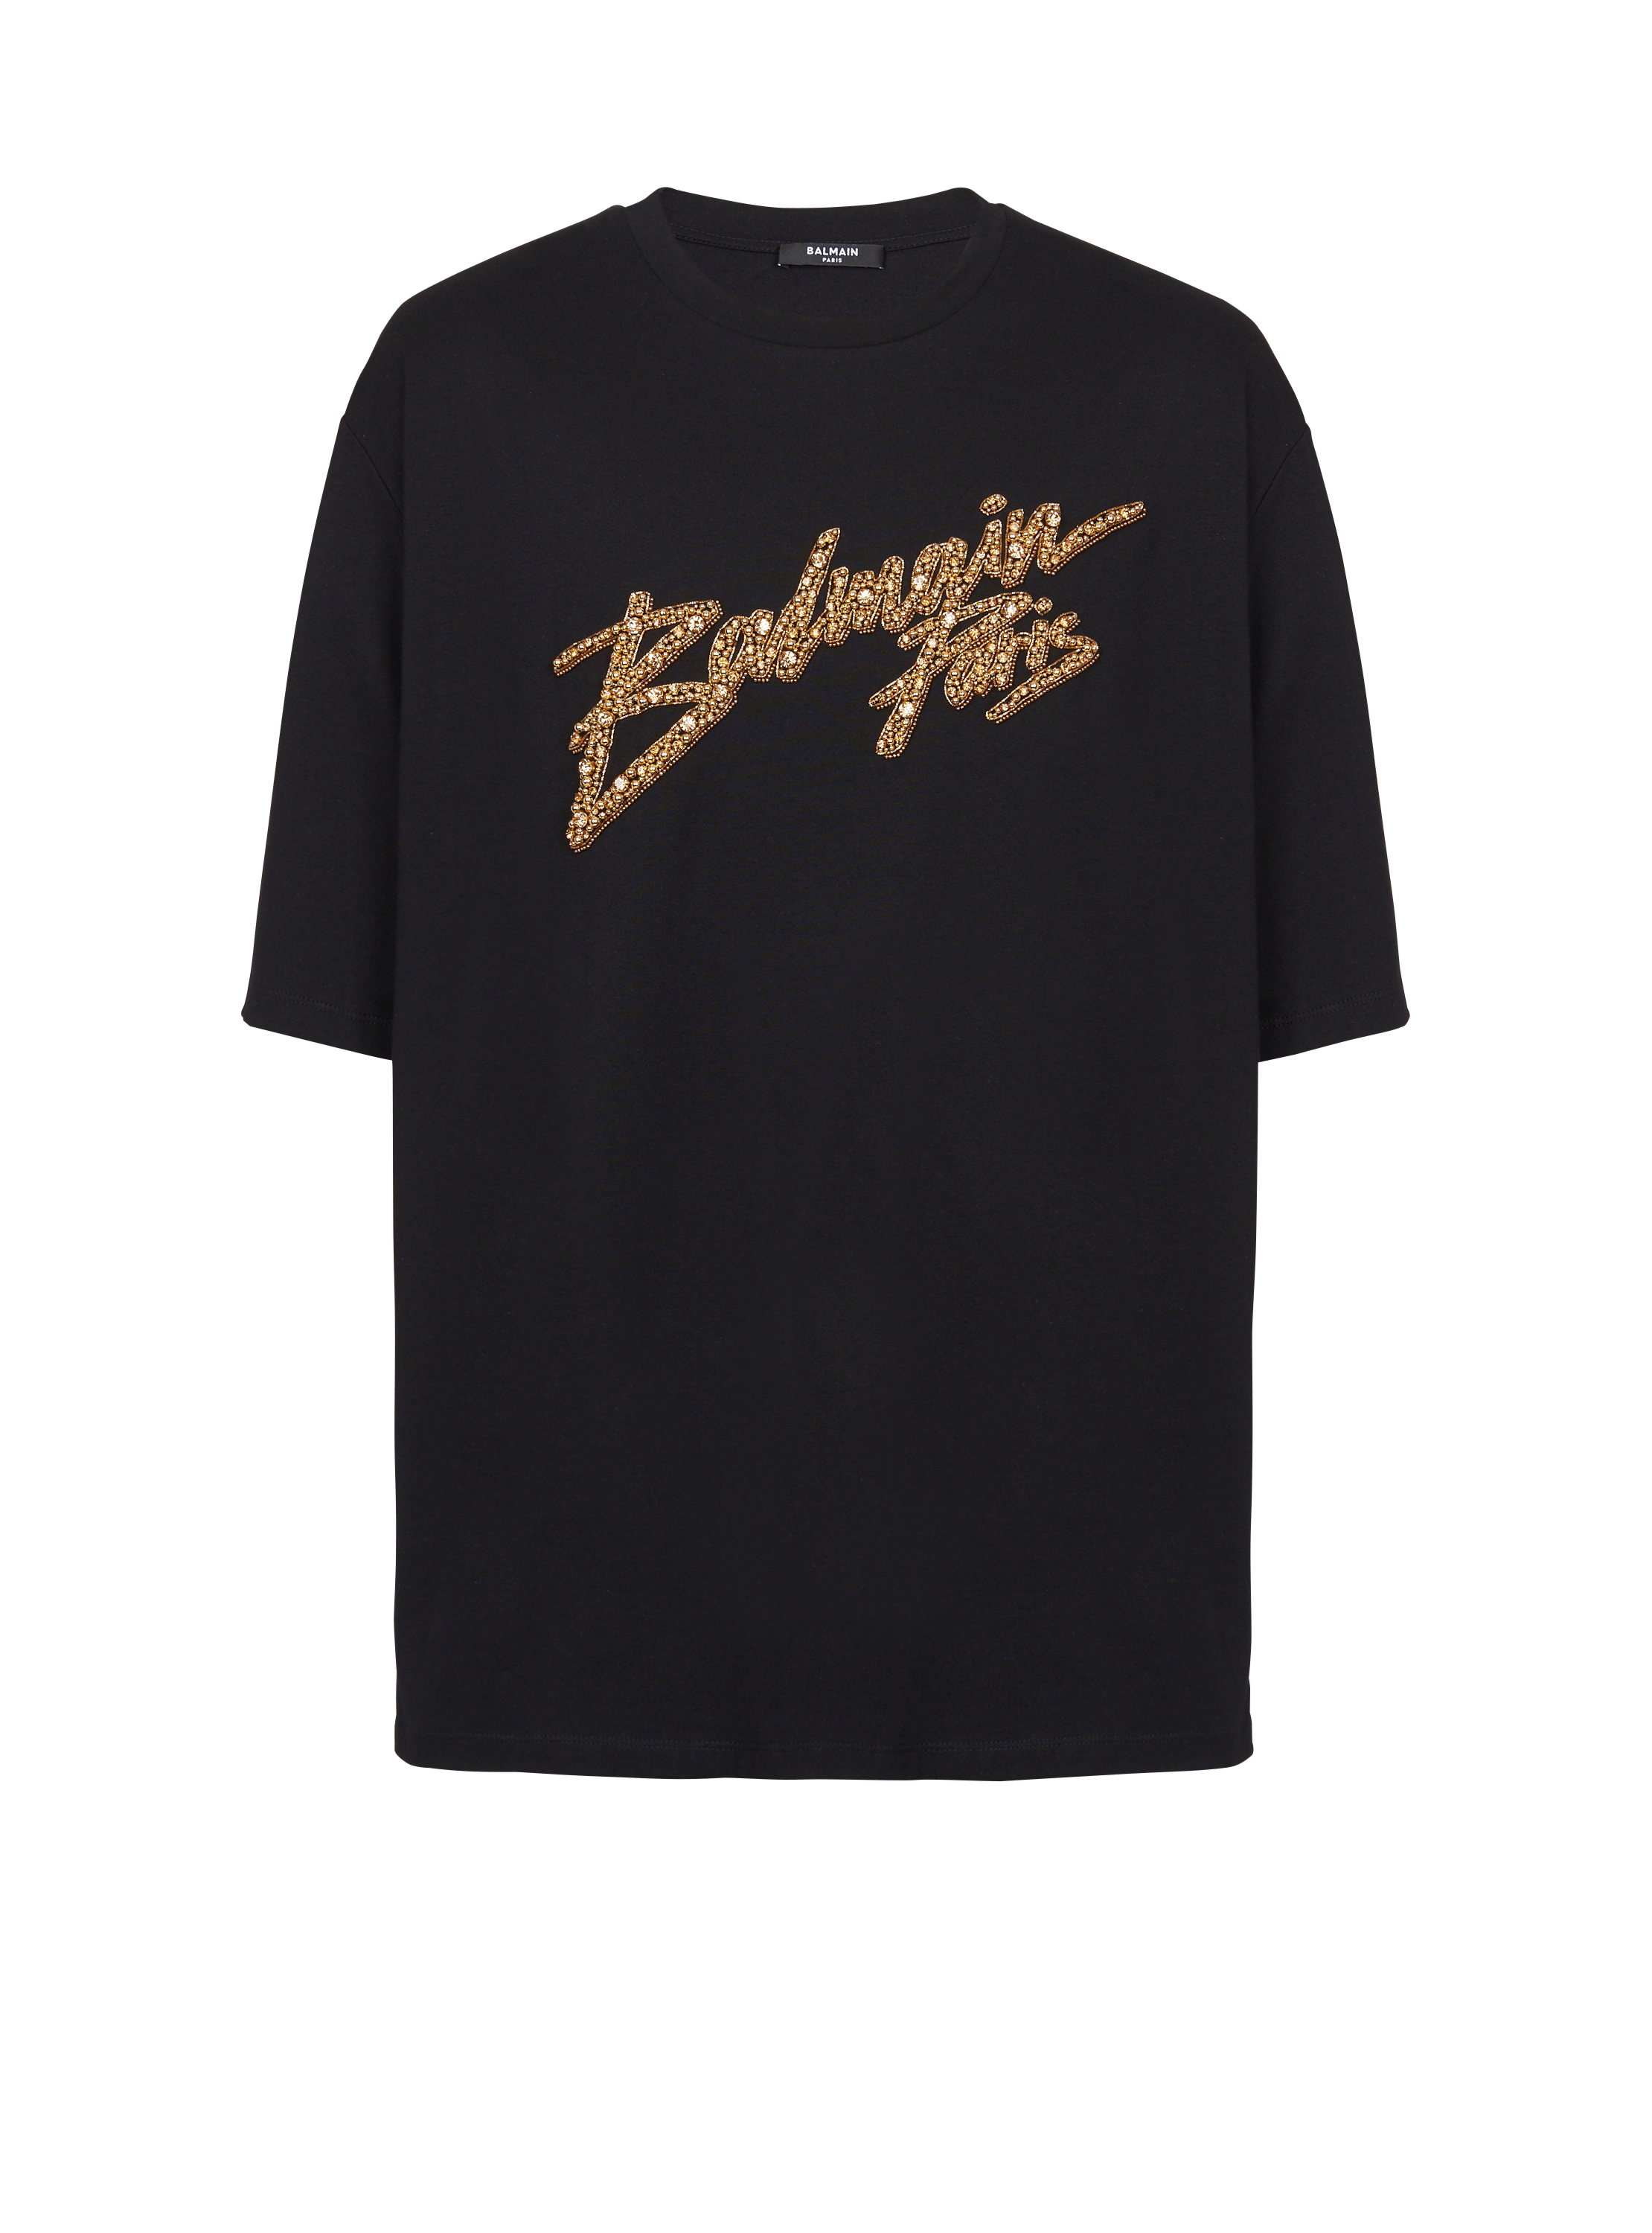 T-shirt Balmain signature , noir, hi-res